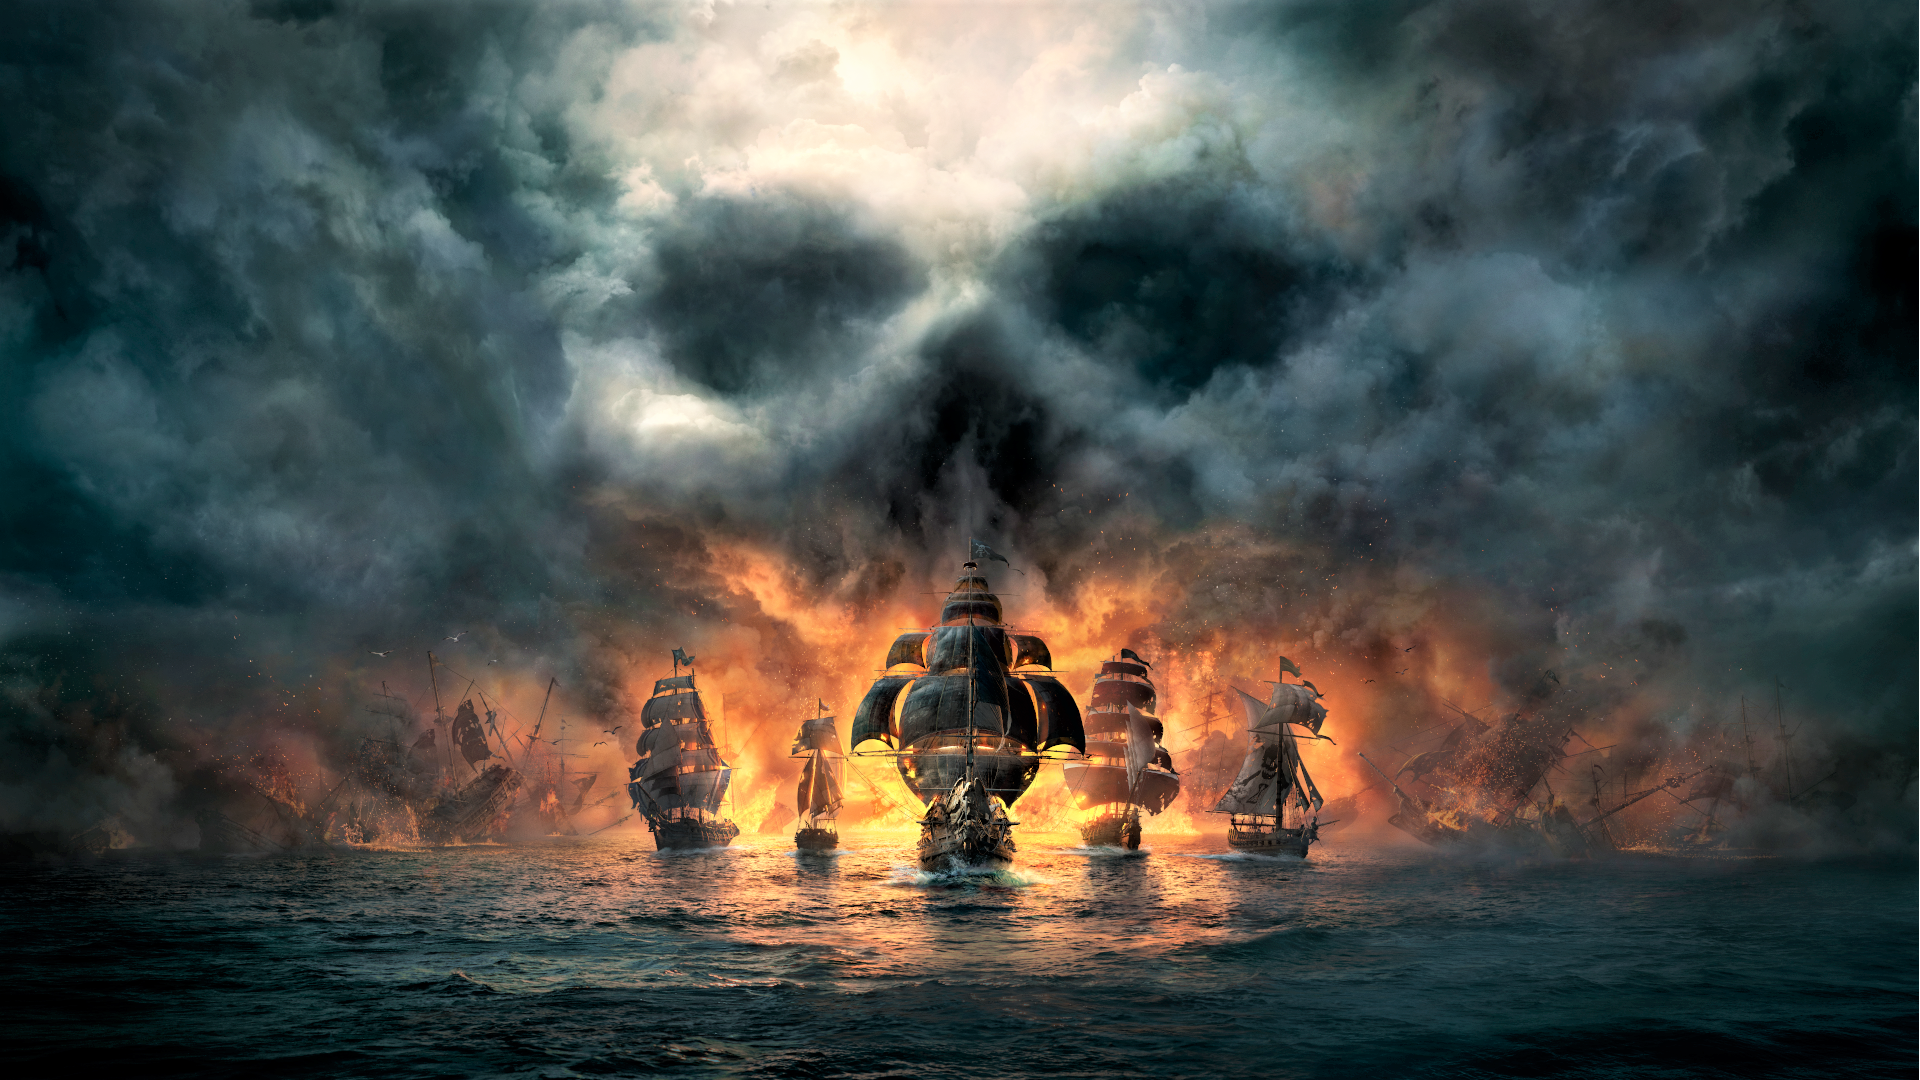  Флотилия пиратских кораблей плывет к камере, а за ними гигантское облако в форме черепа